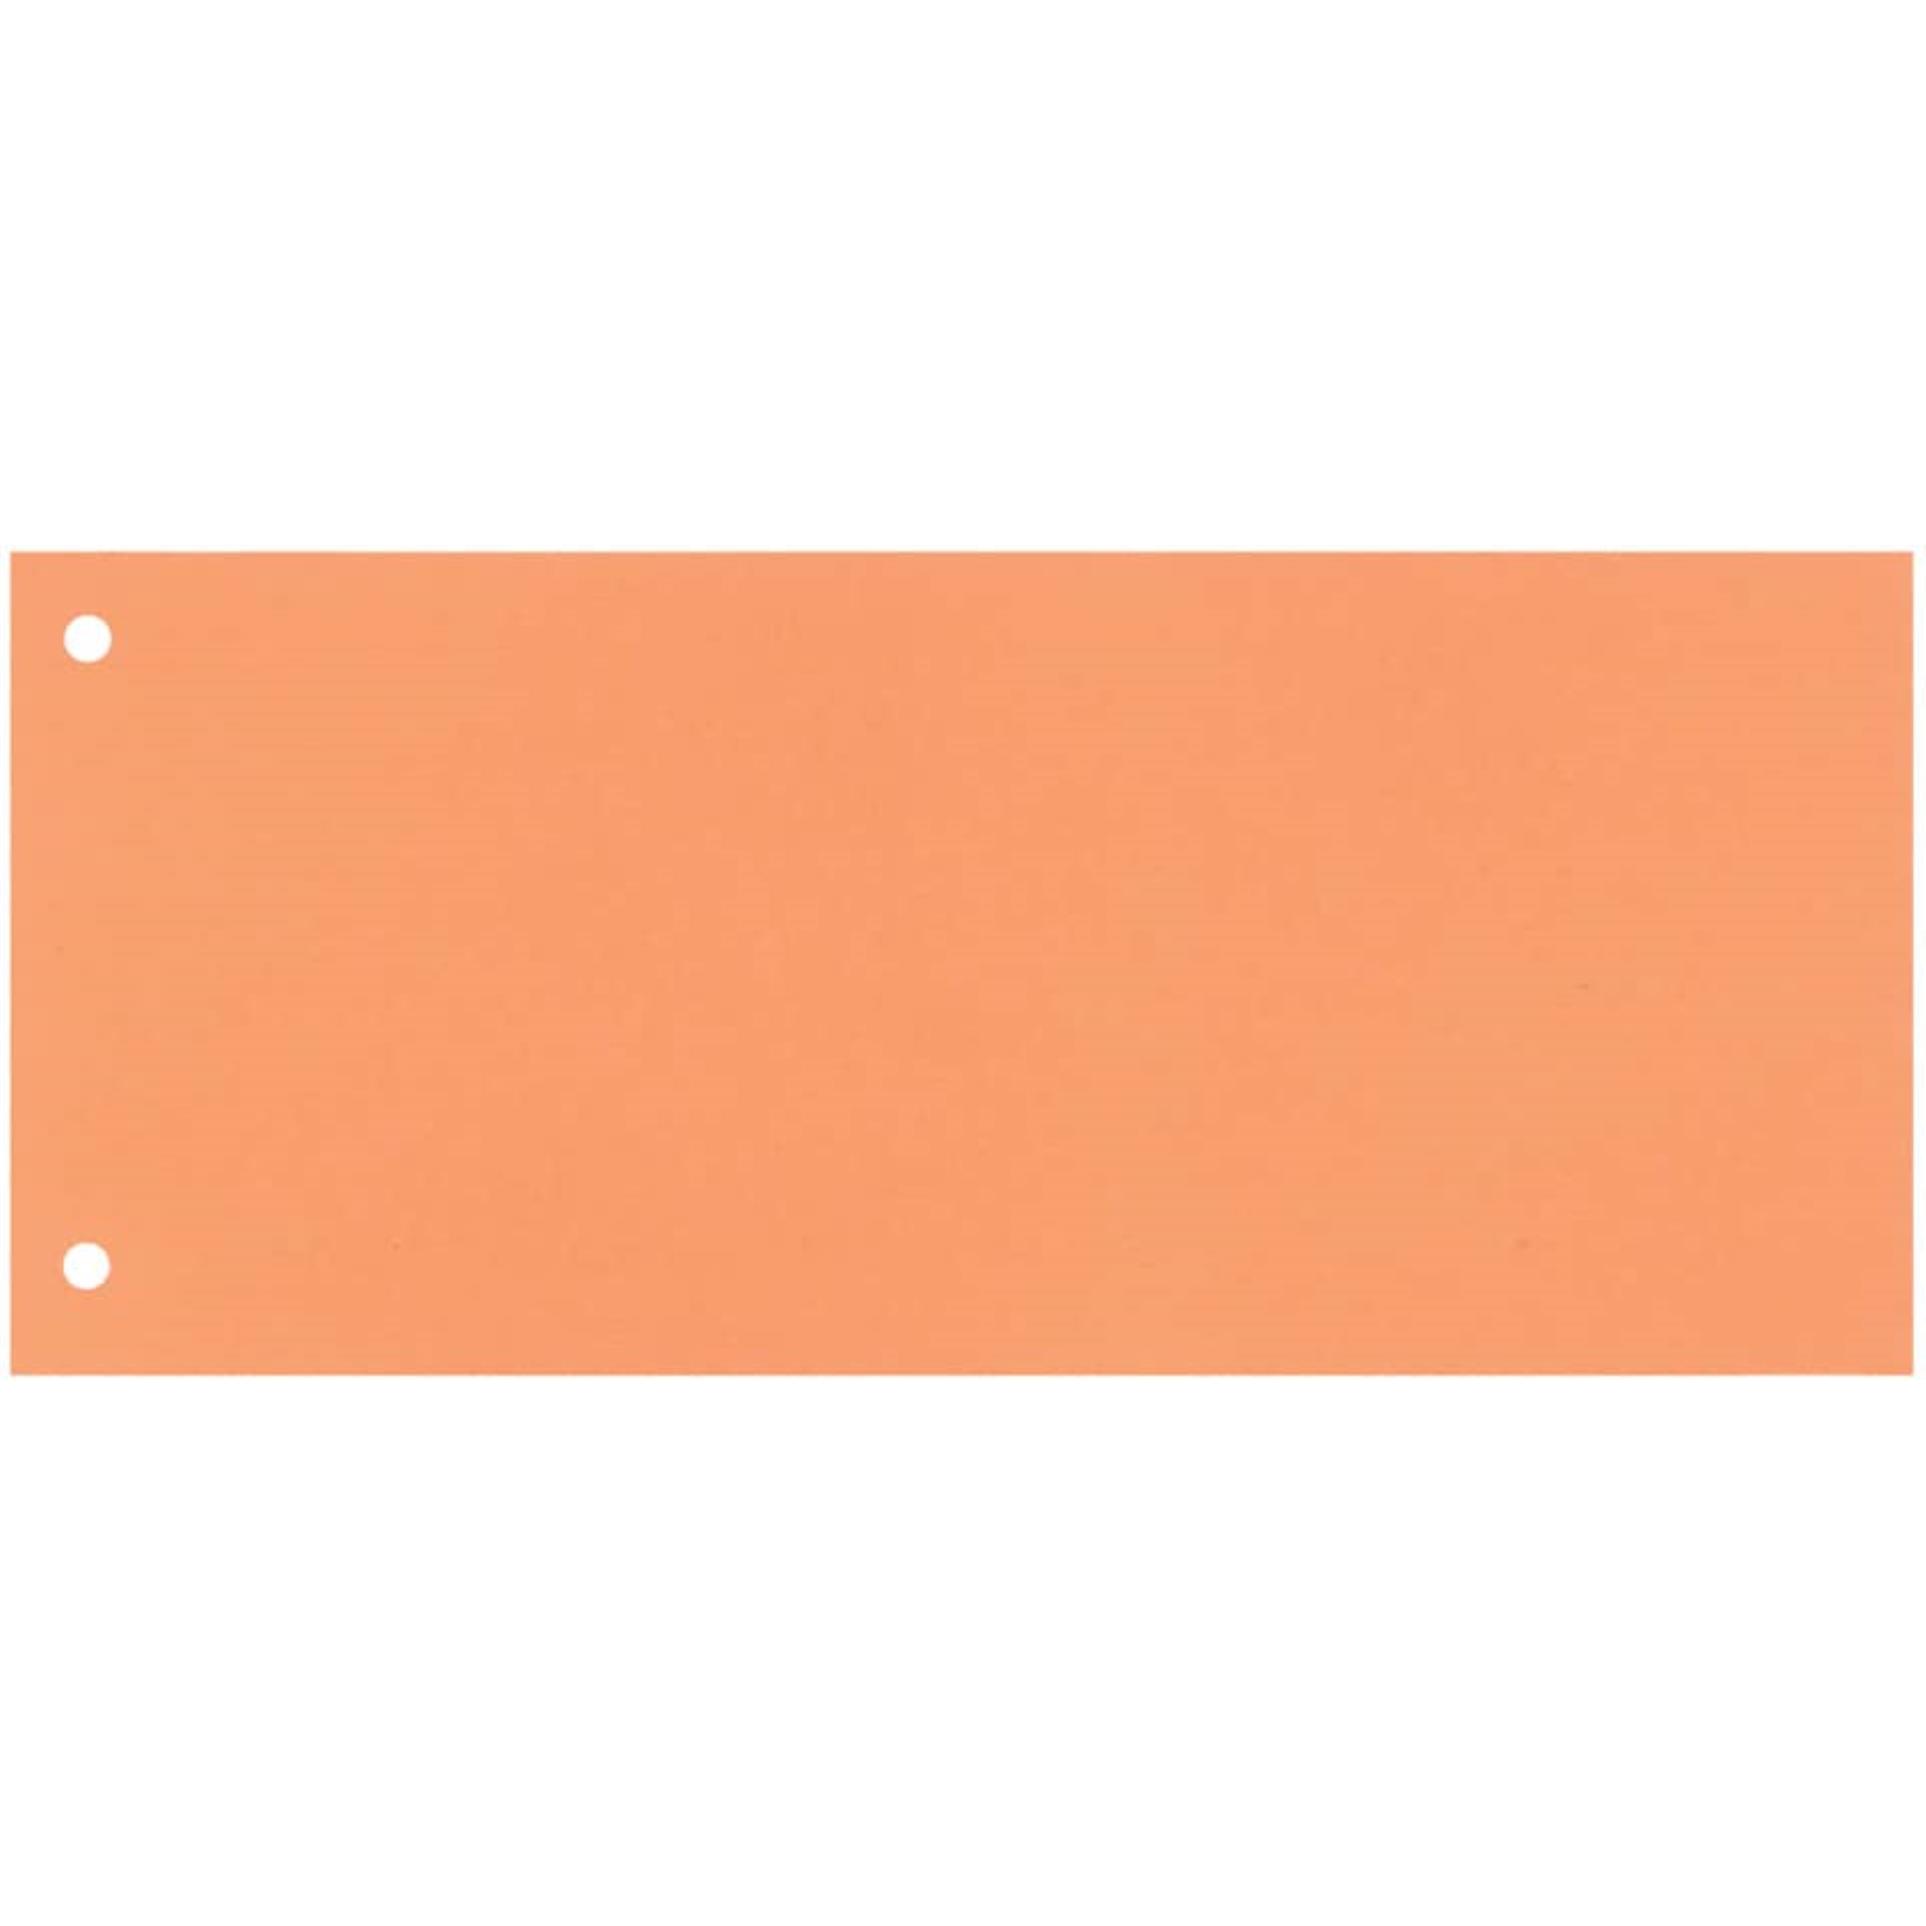 Papírový rozřazovač 1/3 Q-Connect, oranžový, 100ks